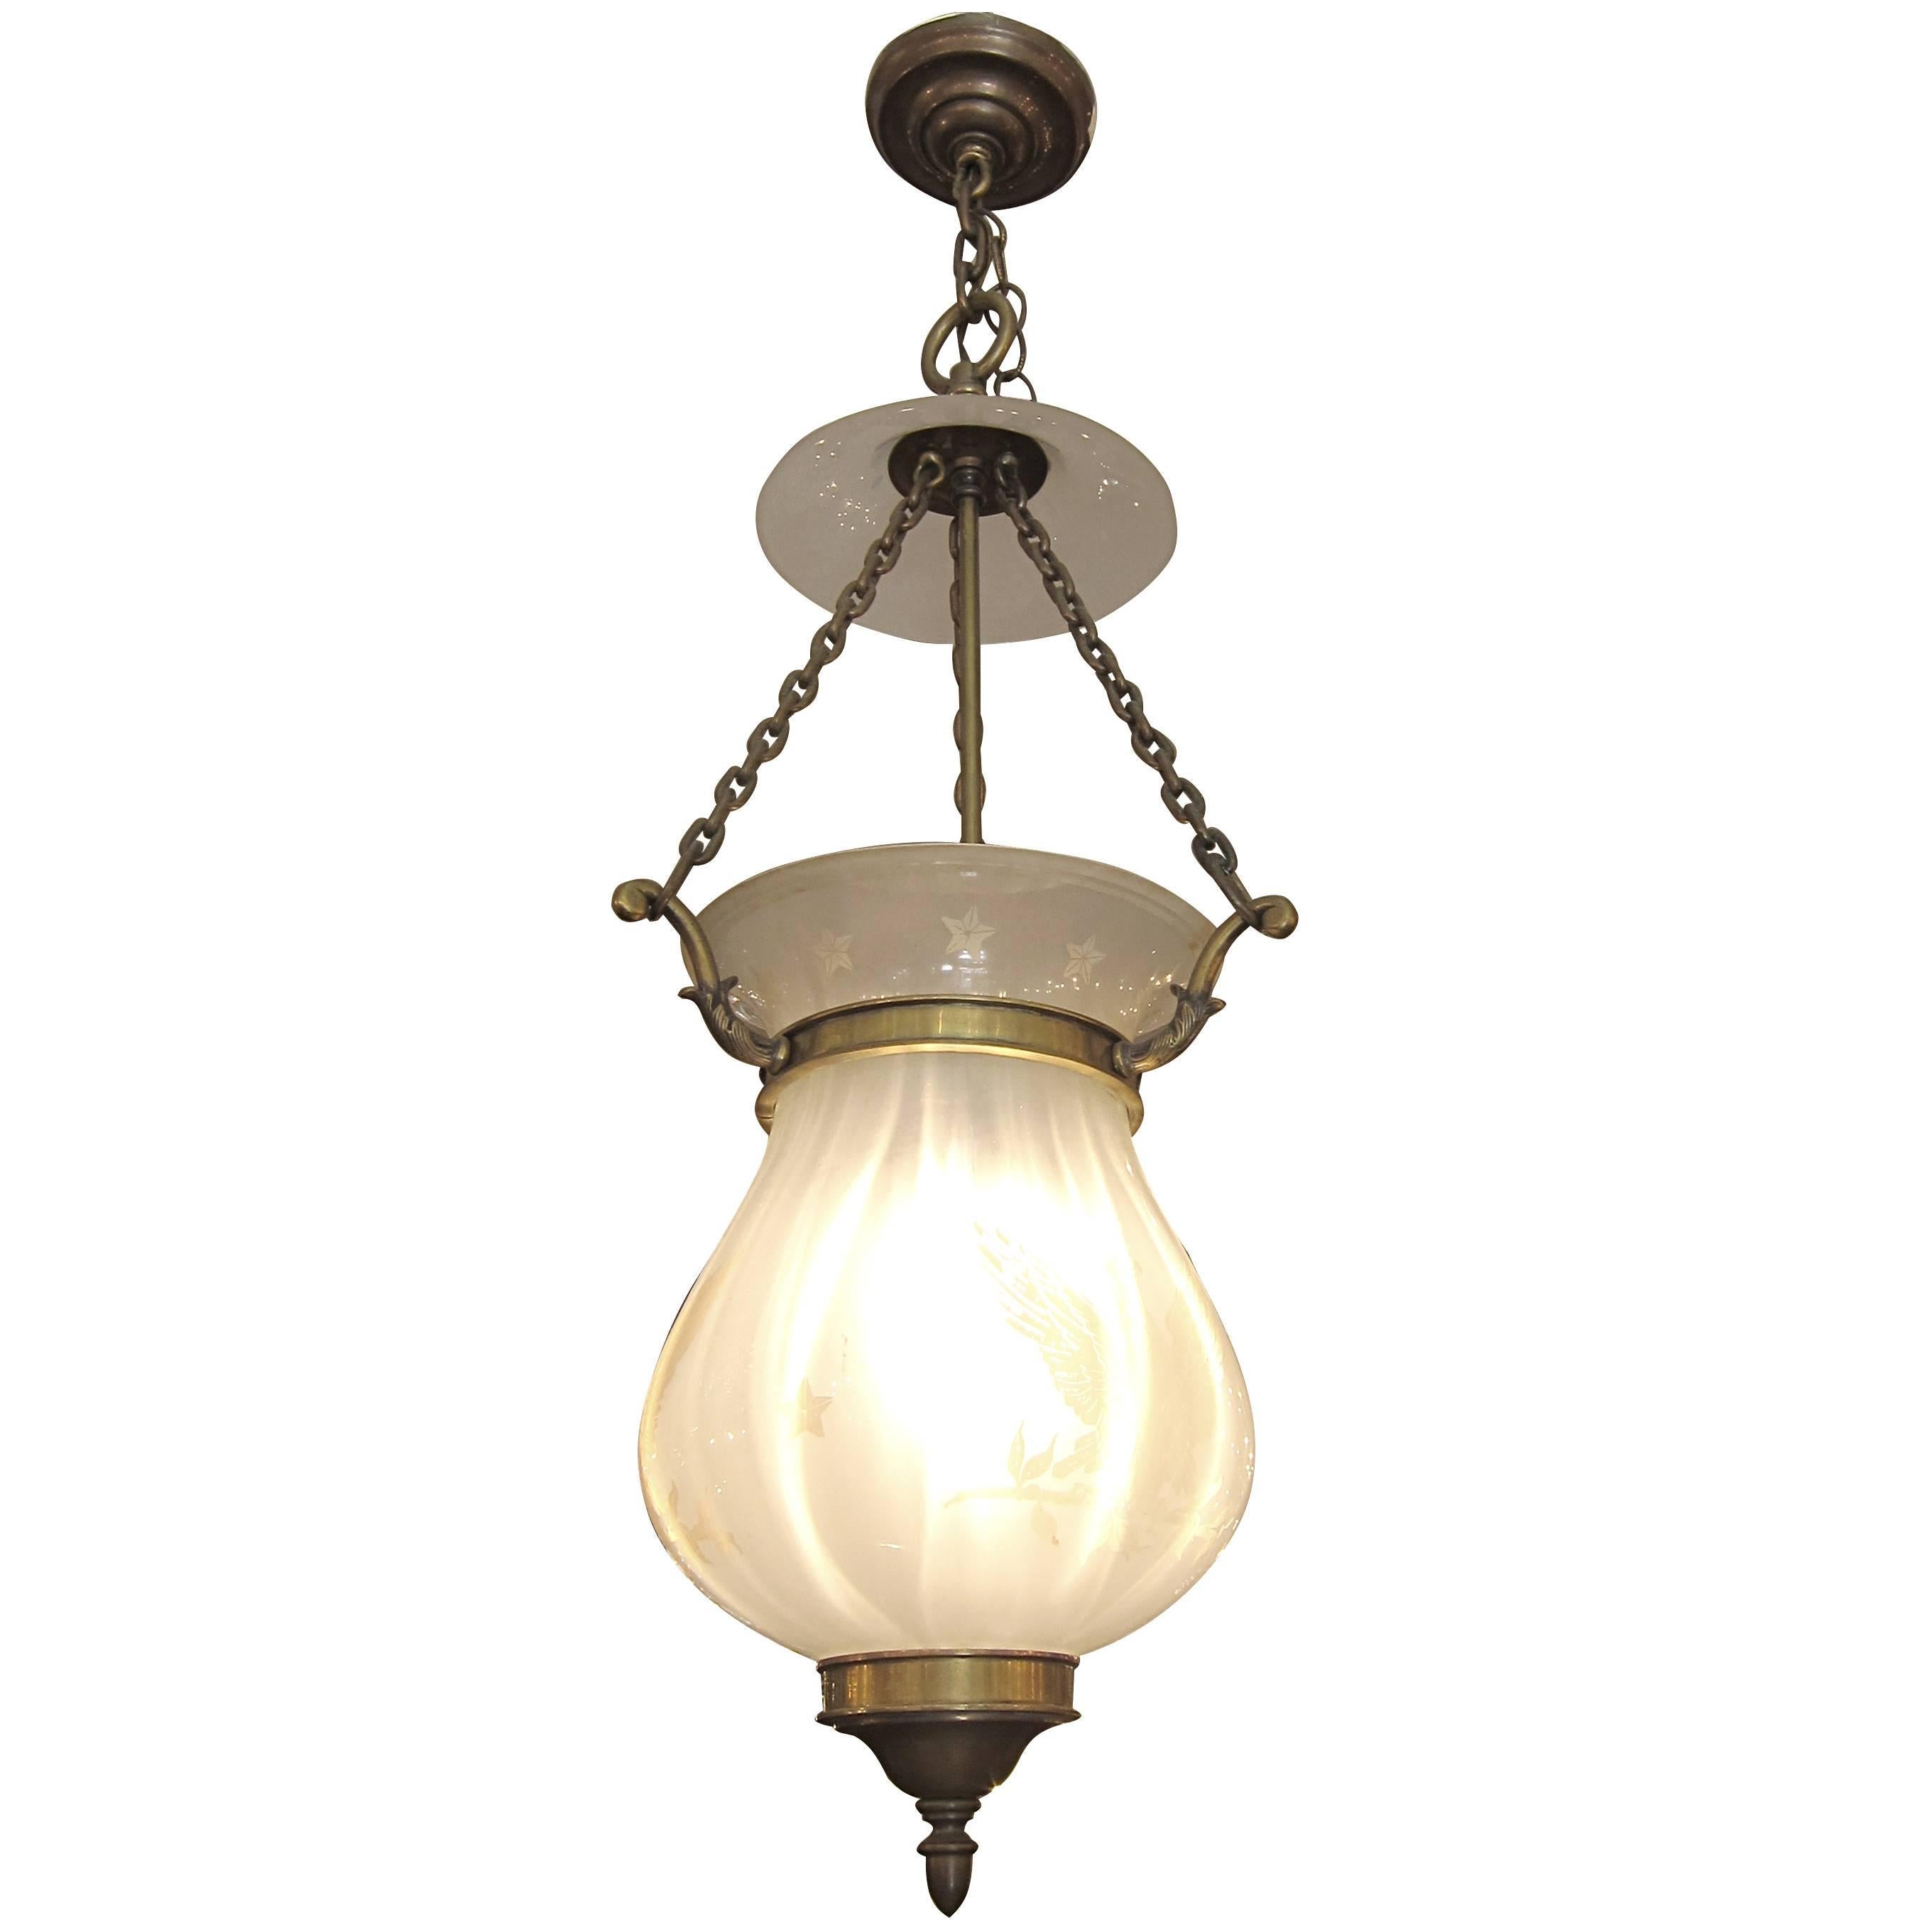 1930s American Made Bell Jar Light